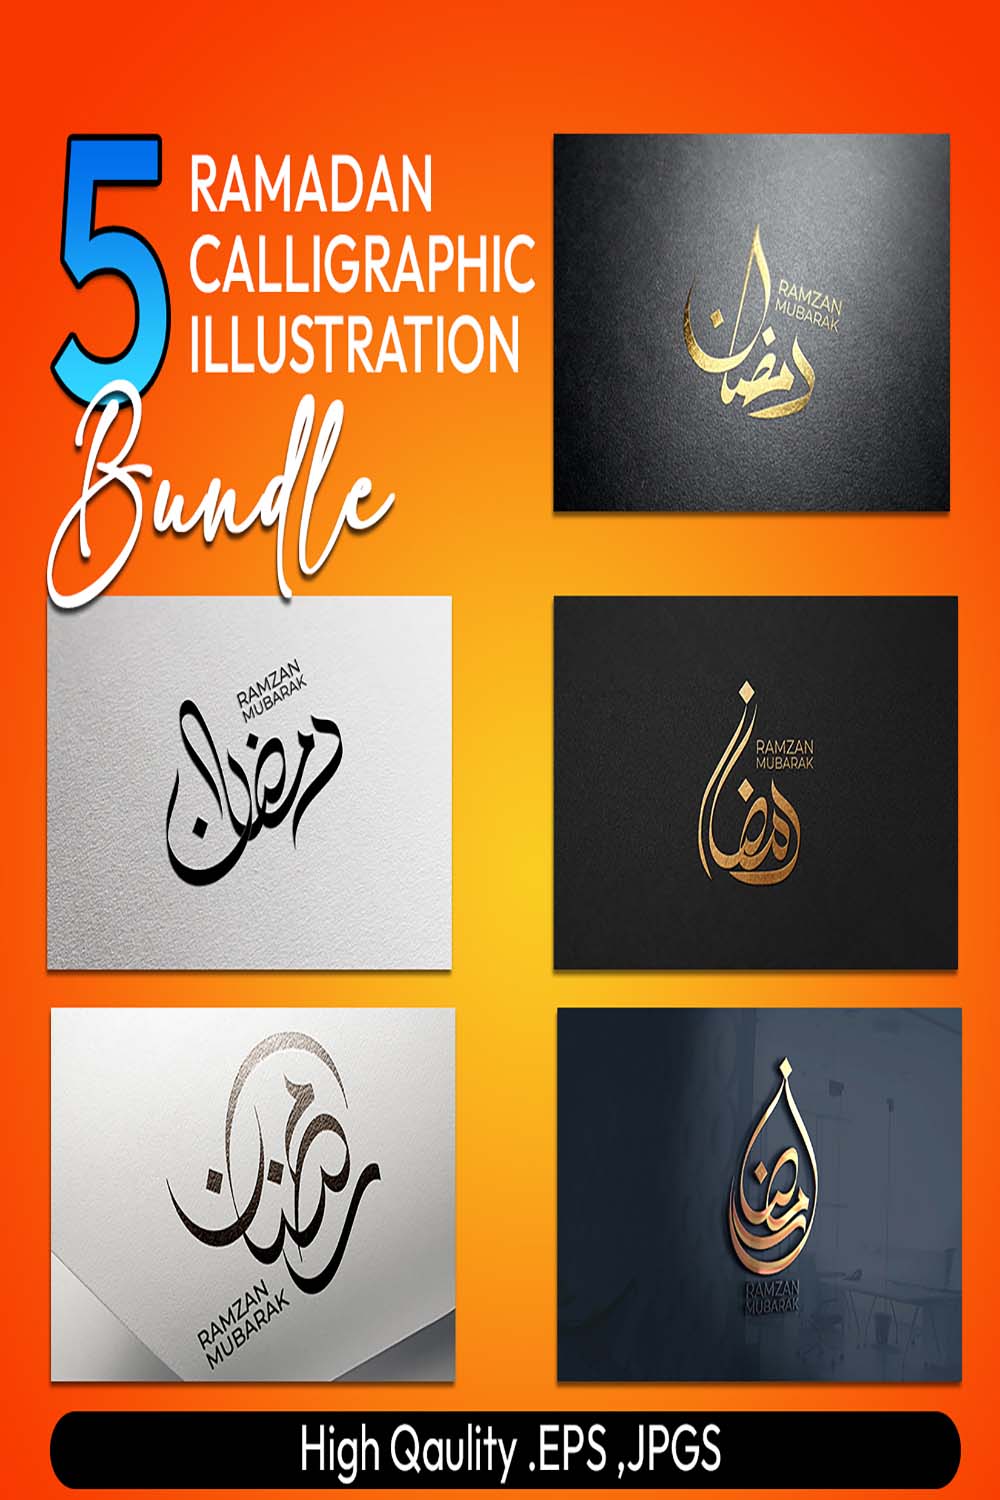 Ramadan Kareem illustration and Calligraphy pinterest preview image.